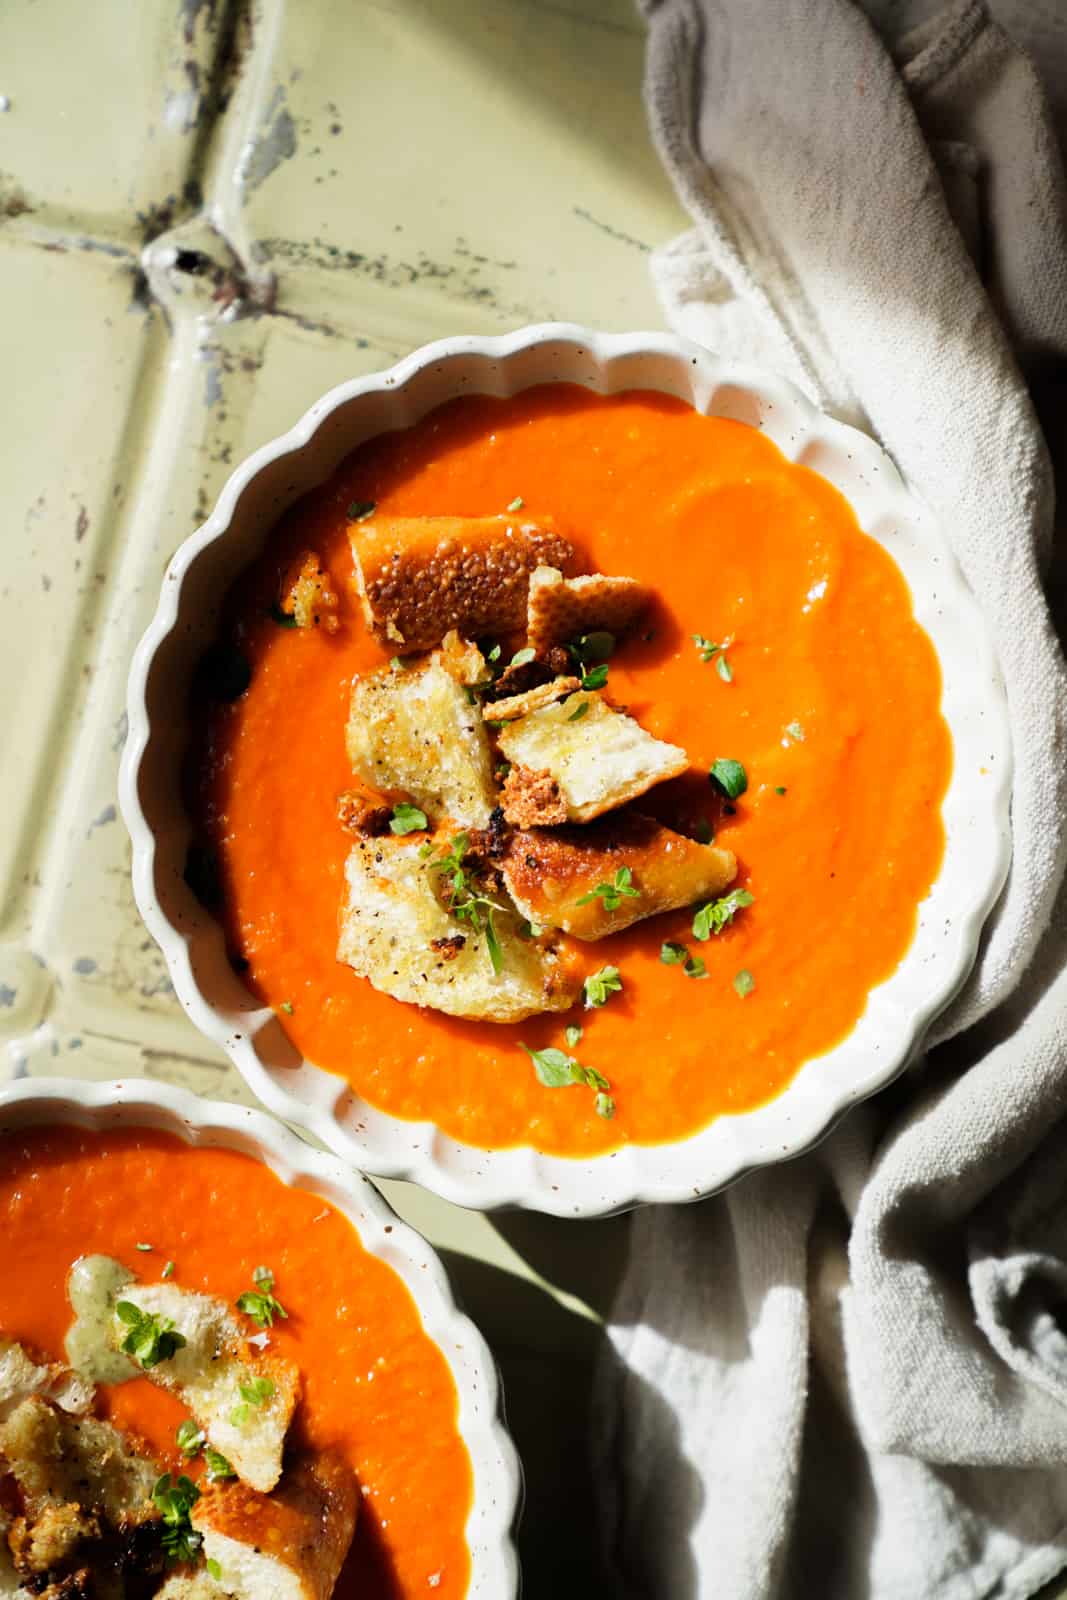 https://www.foodbymaria.com/wp-content/uploads/2020/09/Roasted-Tomato-Soup-5-Ingredients-Vegan.jpg